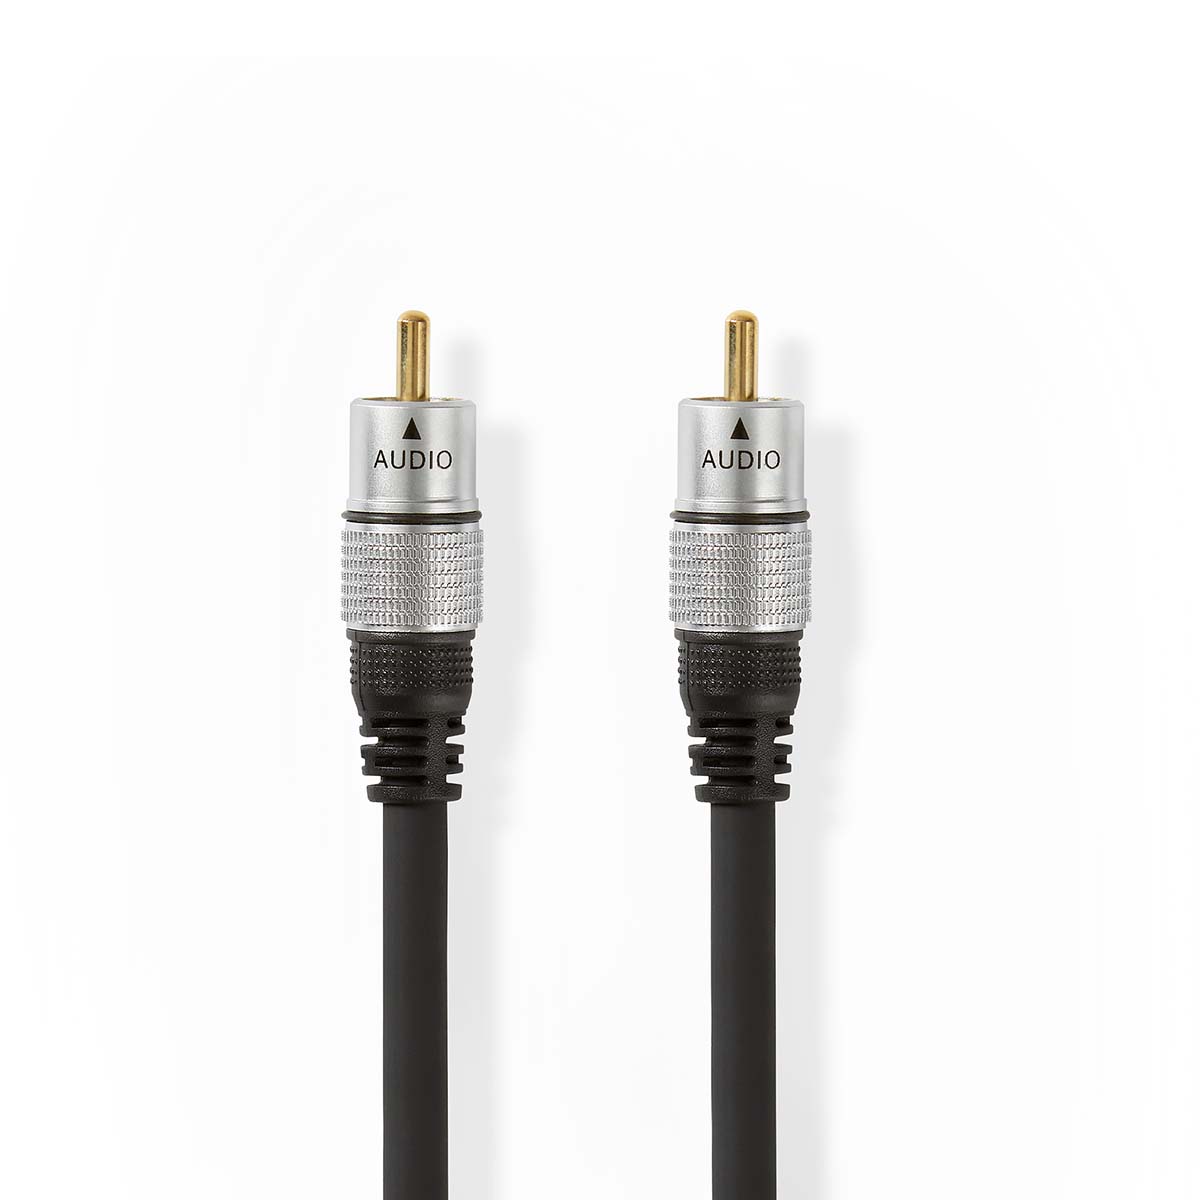 Cable d'alimentation Revox Marantz Philips - Audiolegend